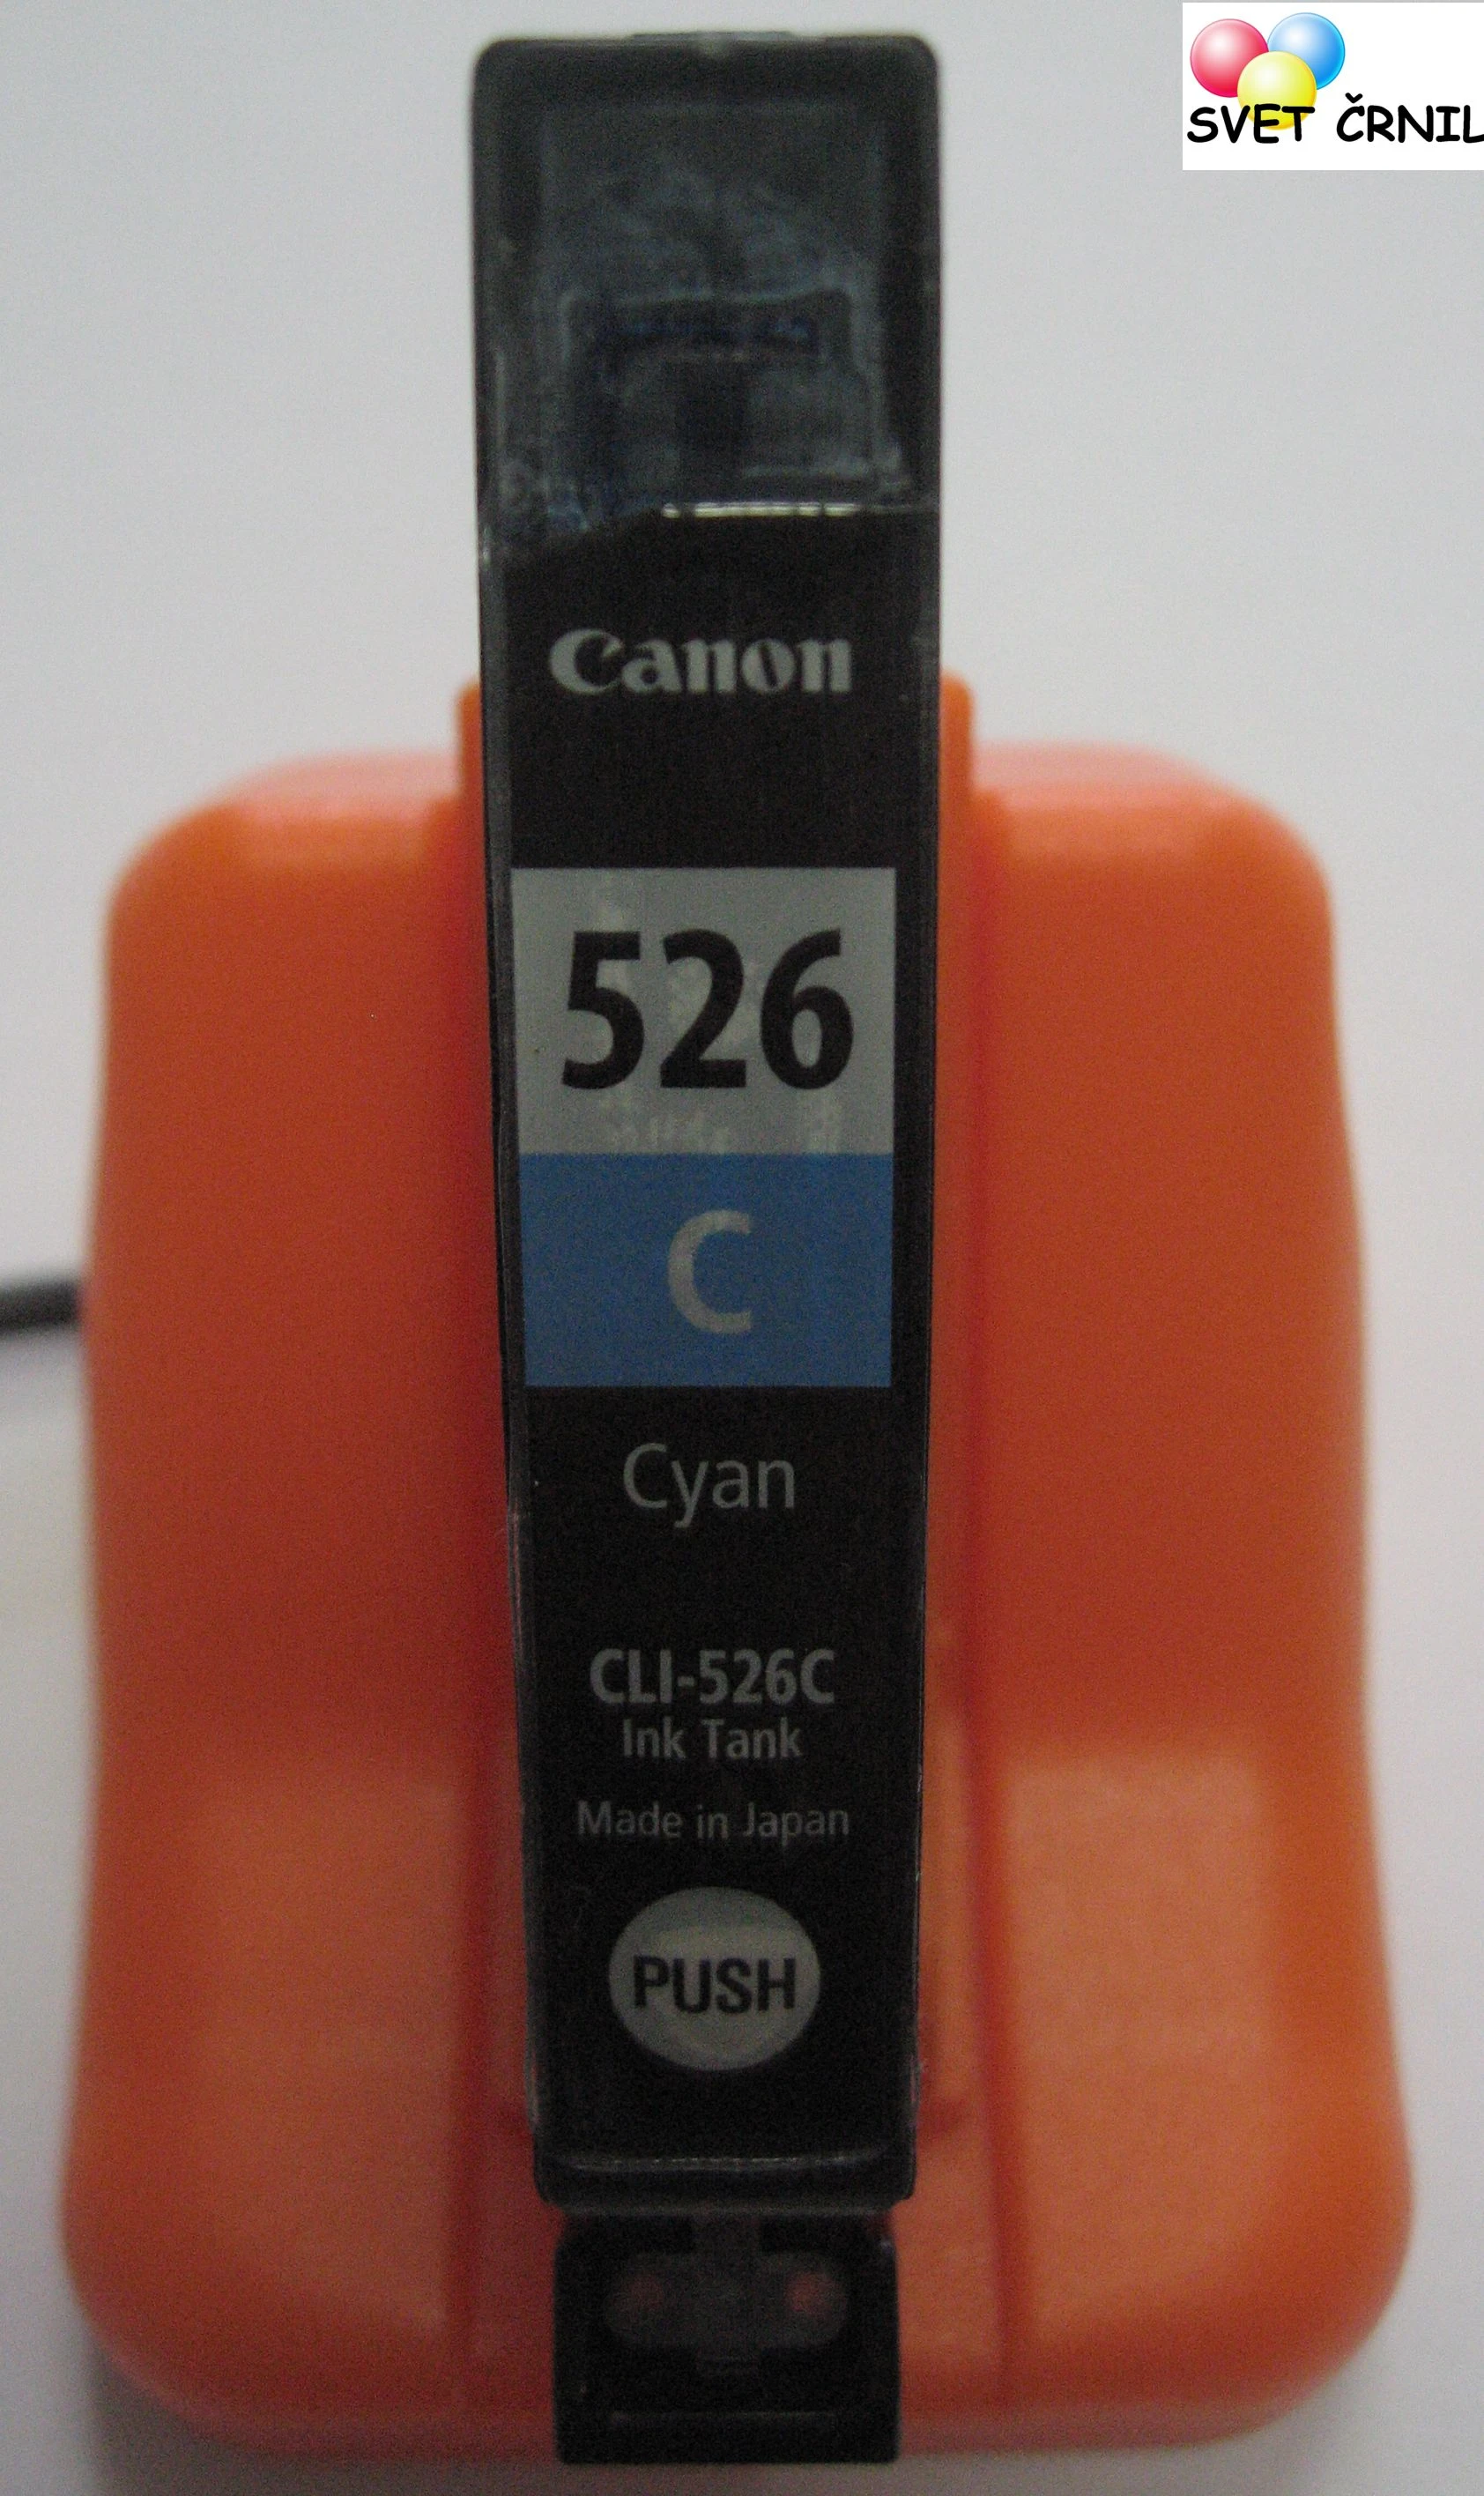 Reseter za Canon PGI-525/CLI-526 kartuše, cli-526,pgi-525,canon reseter,canon reseter cli-526